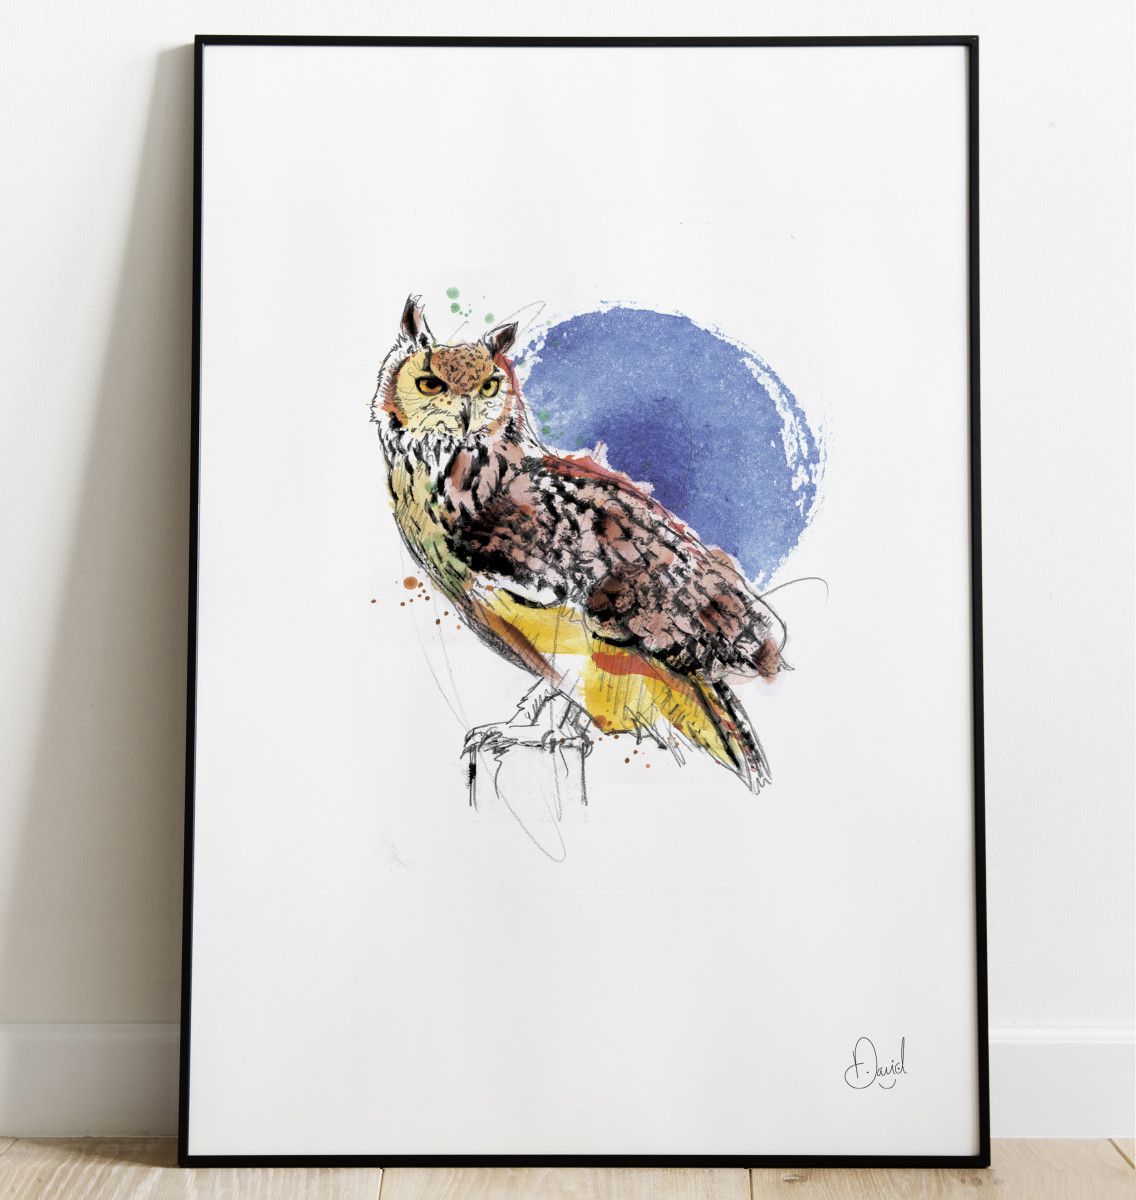 The night owl - art print